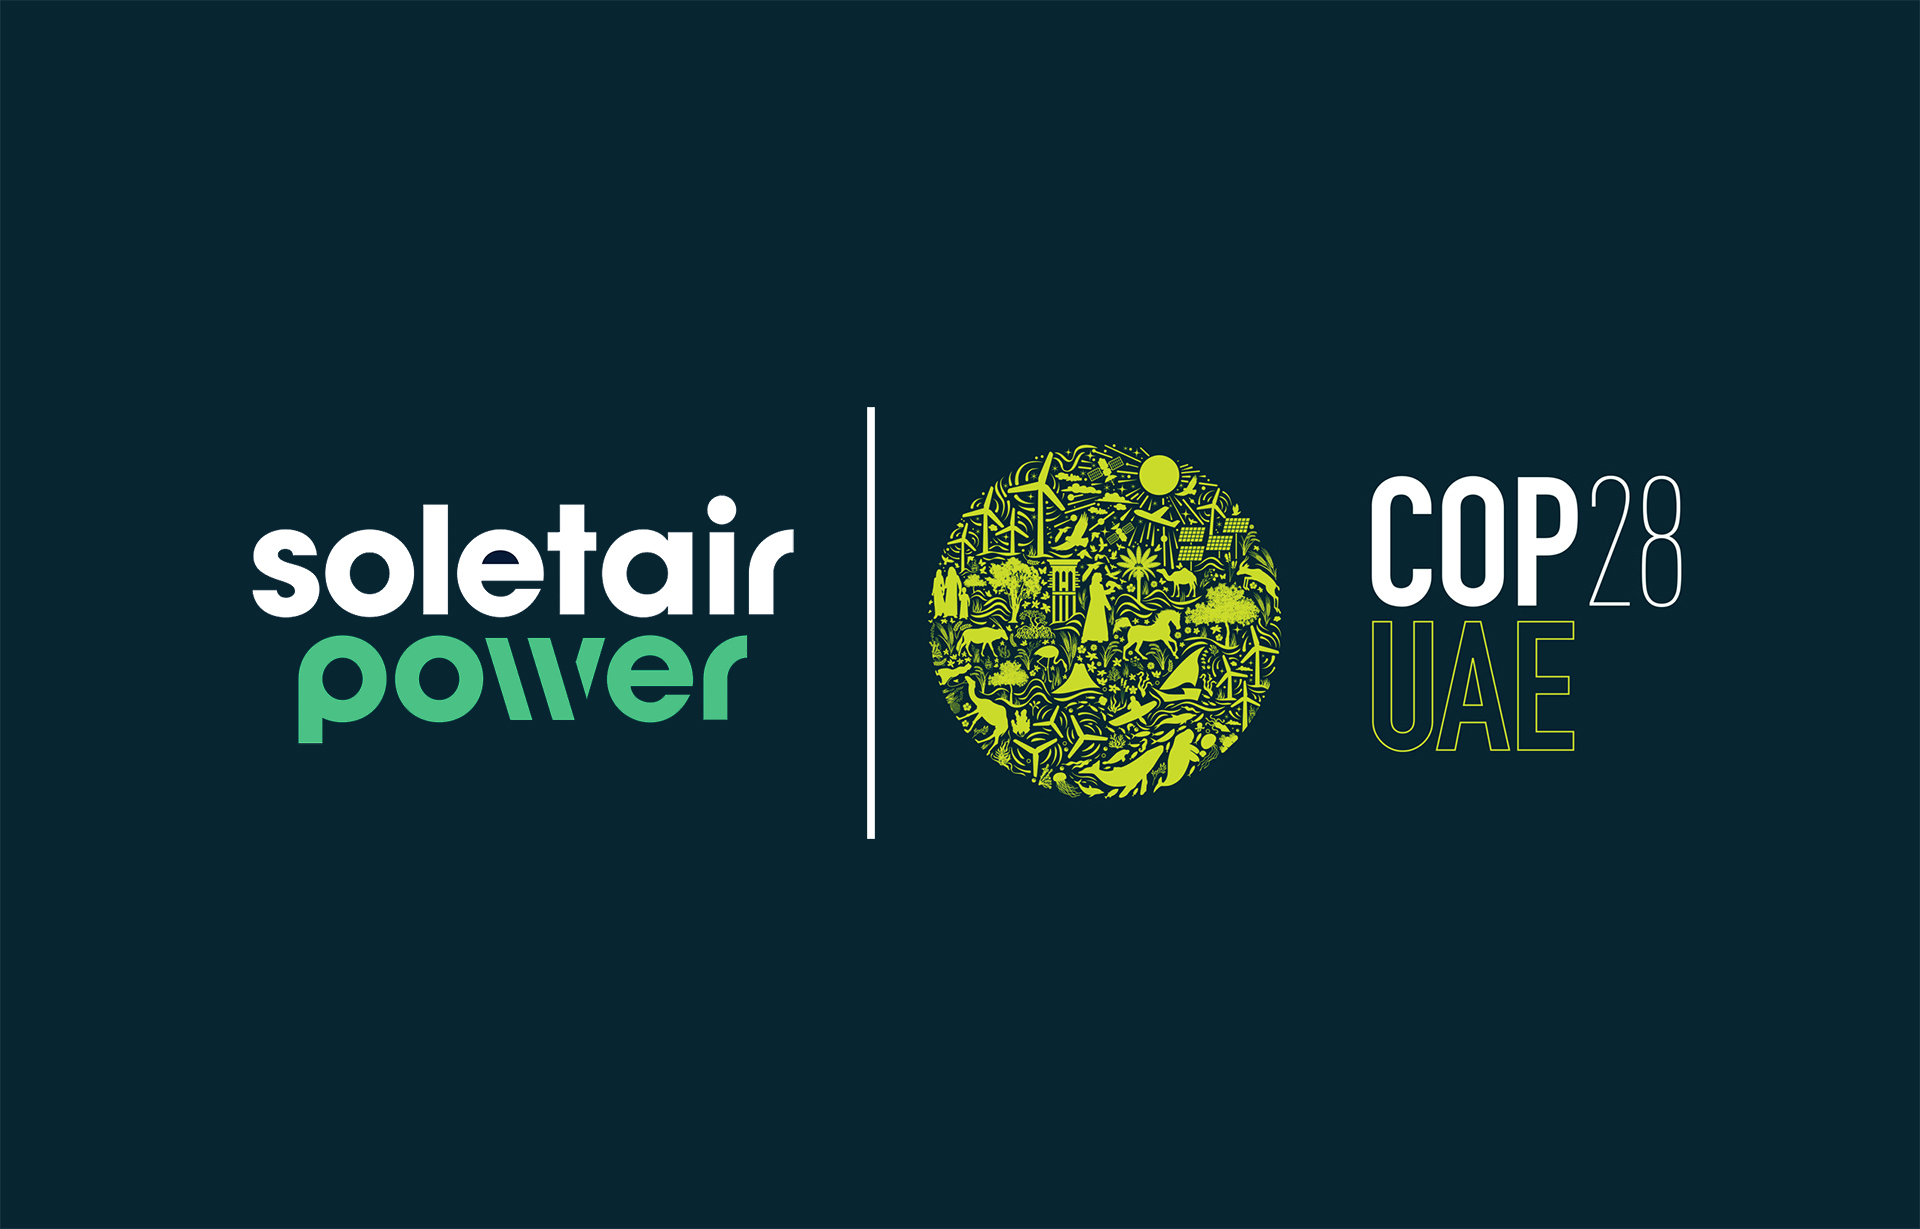 Soletair Power and COP28 UAE 2023 Logo